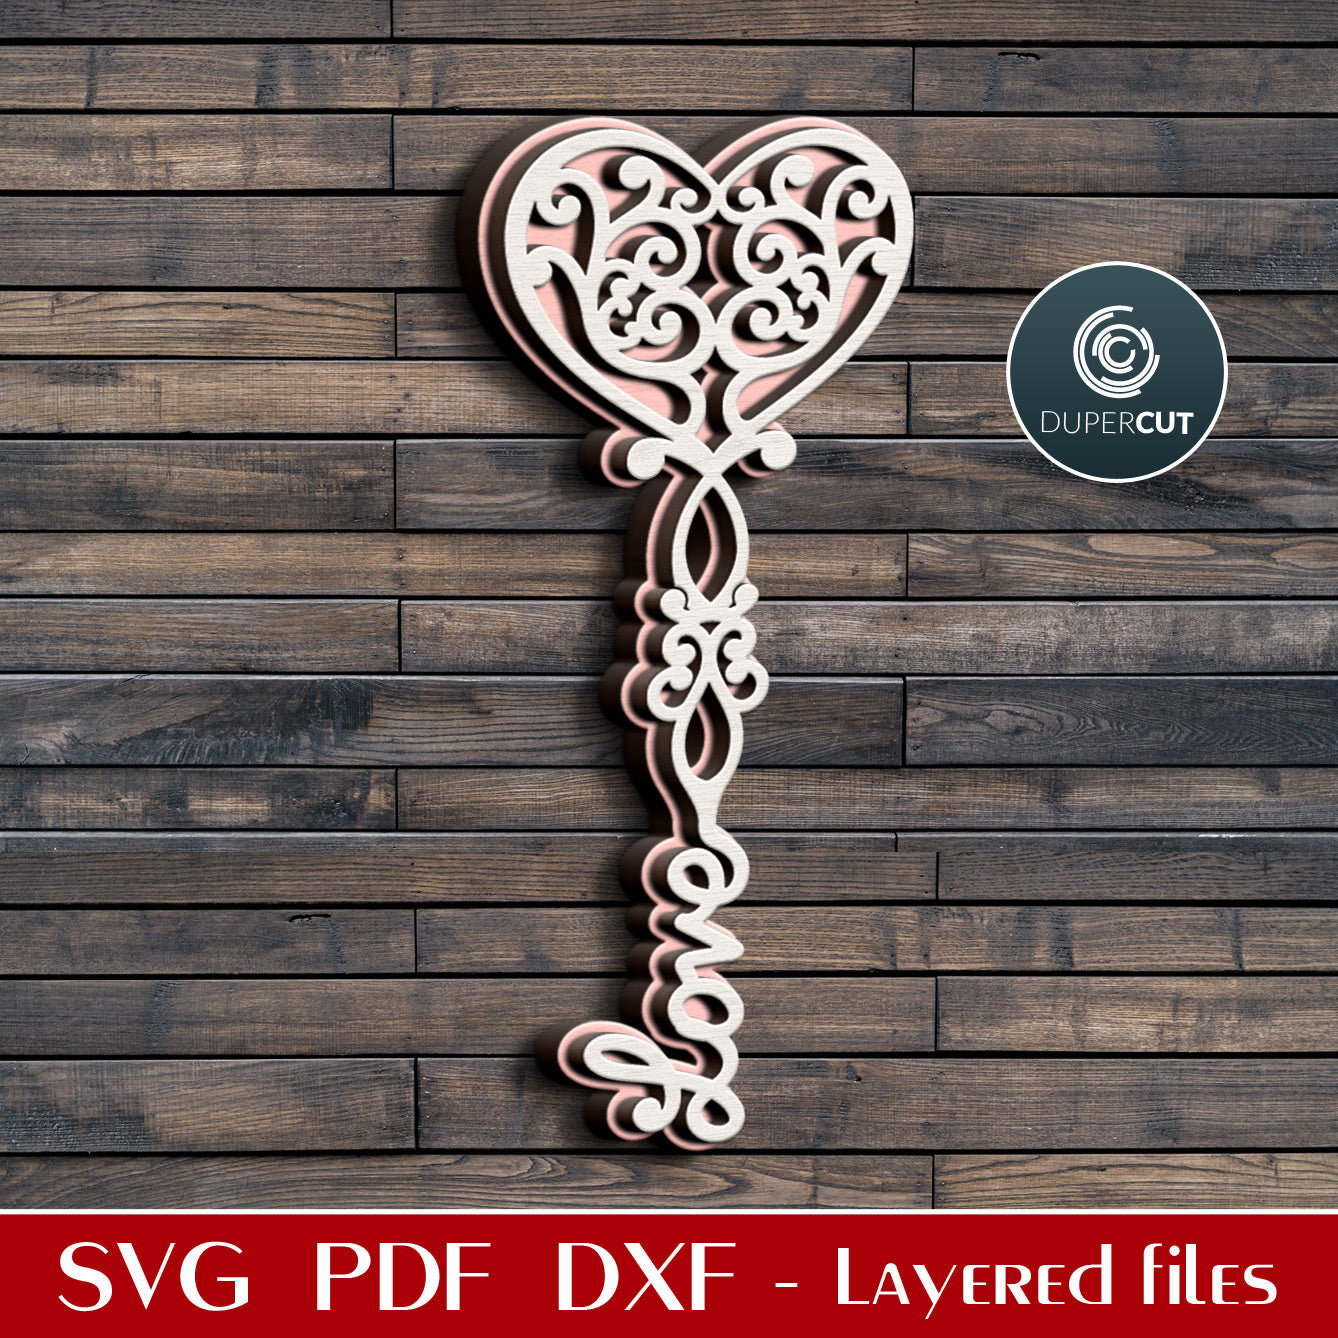 Unlock my heart - Valentine's day key layered decoration SVG DXF vector pattern for Glowforge, Cricut, Silhouette, CNC plasma, scroll saw by DuperCut.com